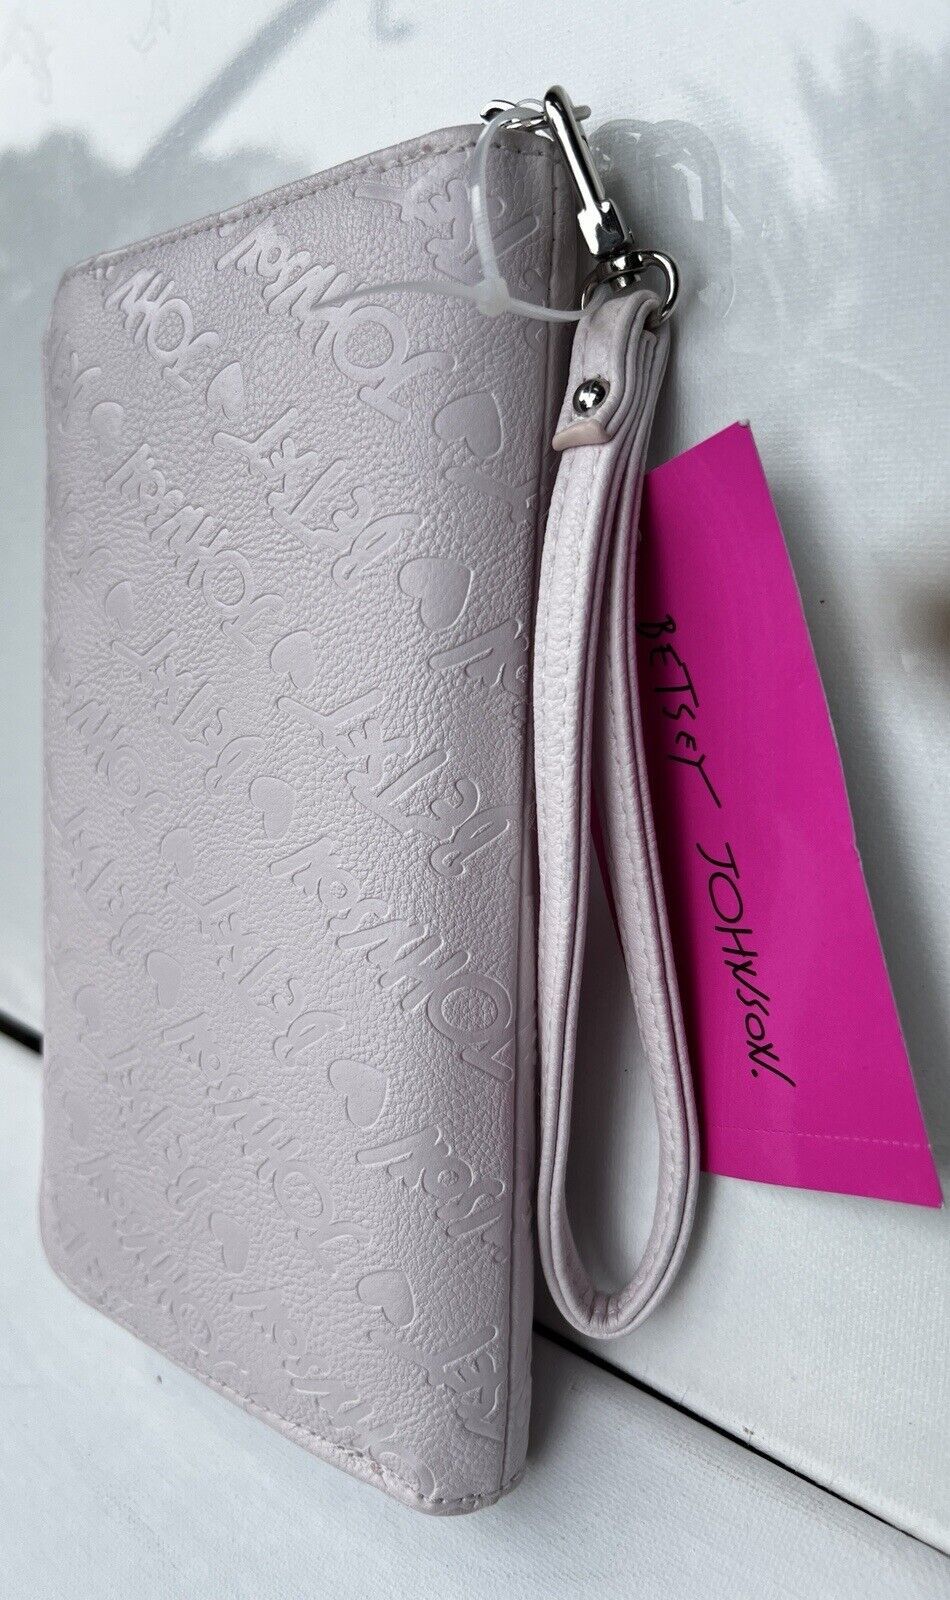 Betsey Johnson Pink Wristlet Wallet